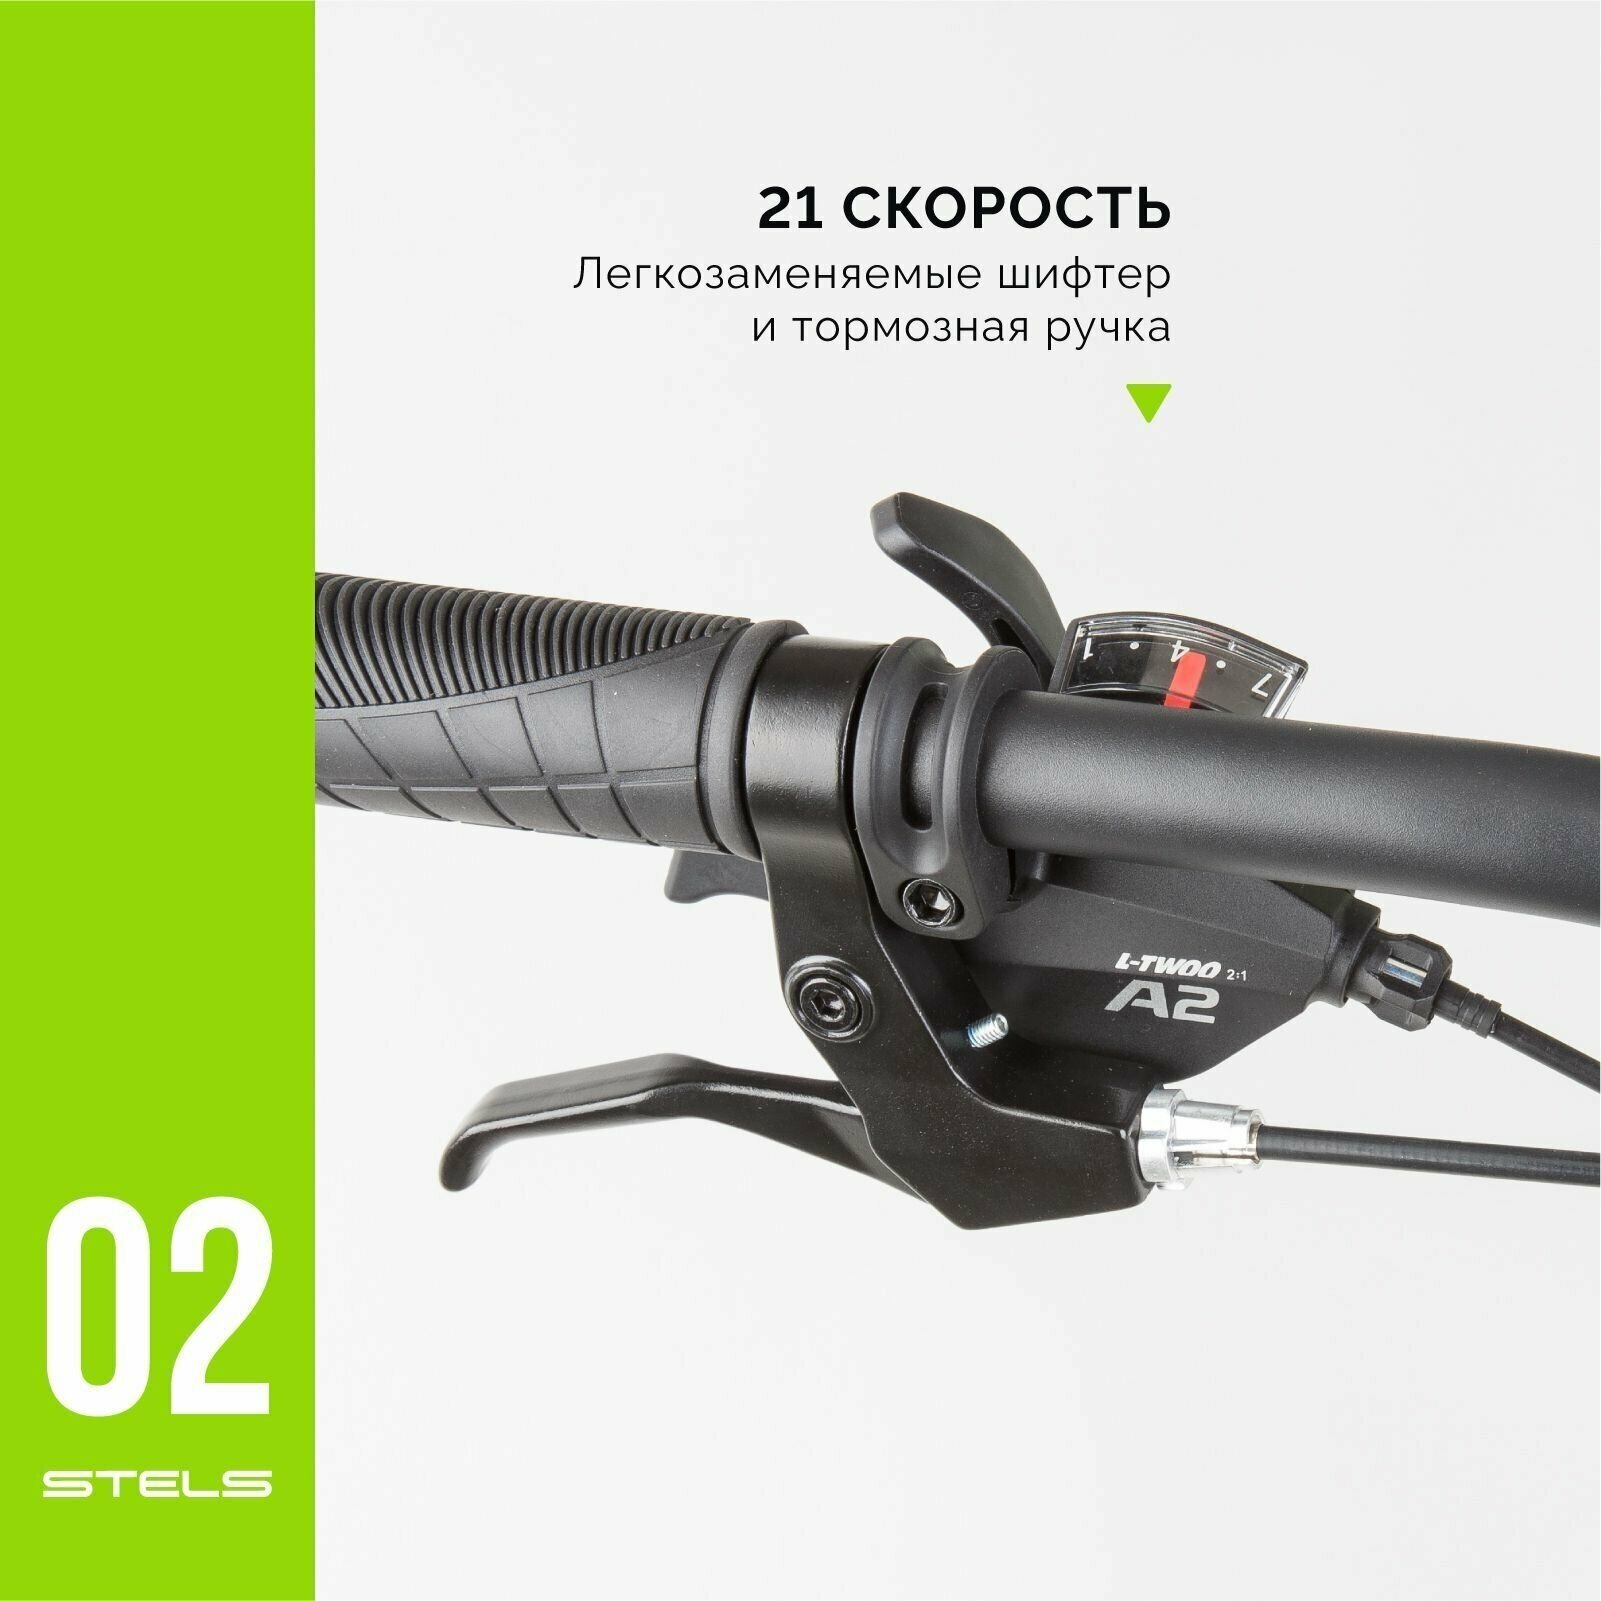 Велосипед горный Navigator-710 MD 27.5" V020, зелёный, рама 18" 2023 года